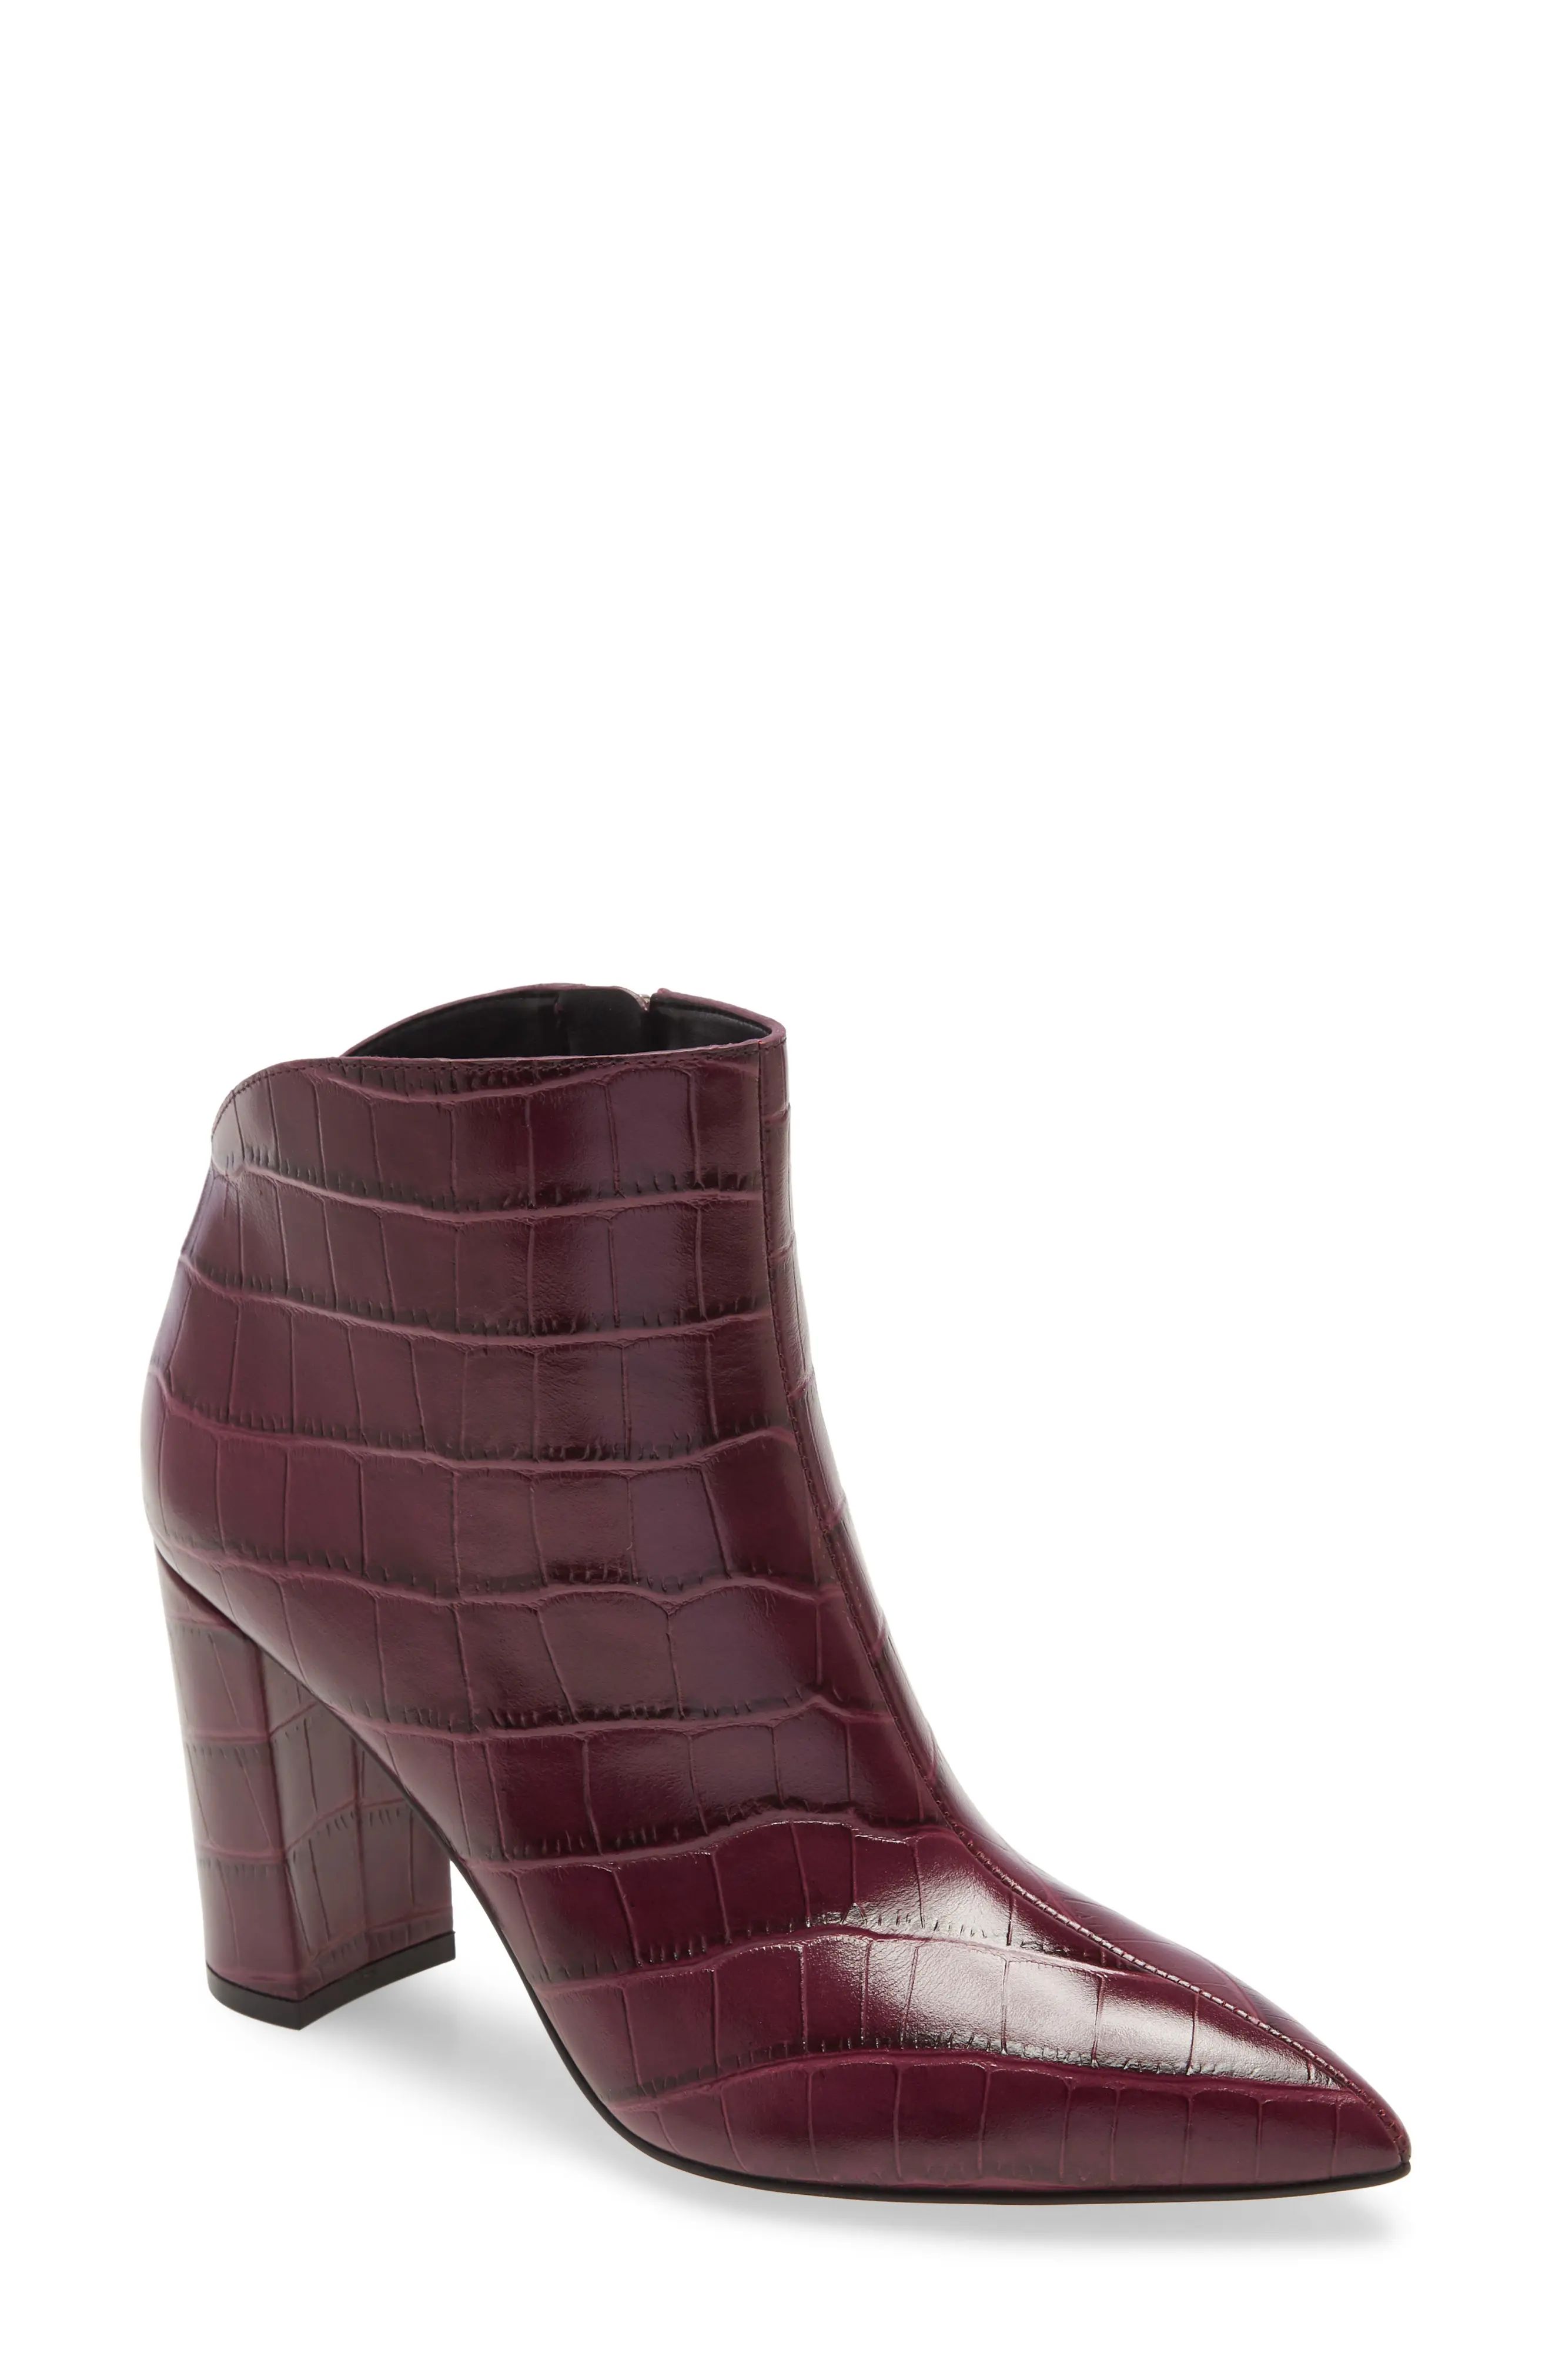 Women's Marc Fisher Ltd Unno Pointed Toe Bootie, Size 9 M - Burgundy | Nordstrom